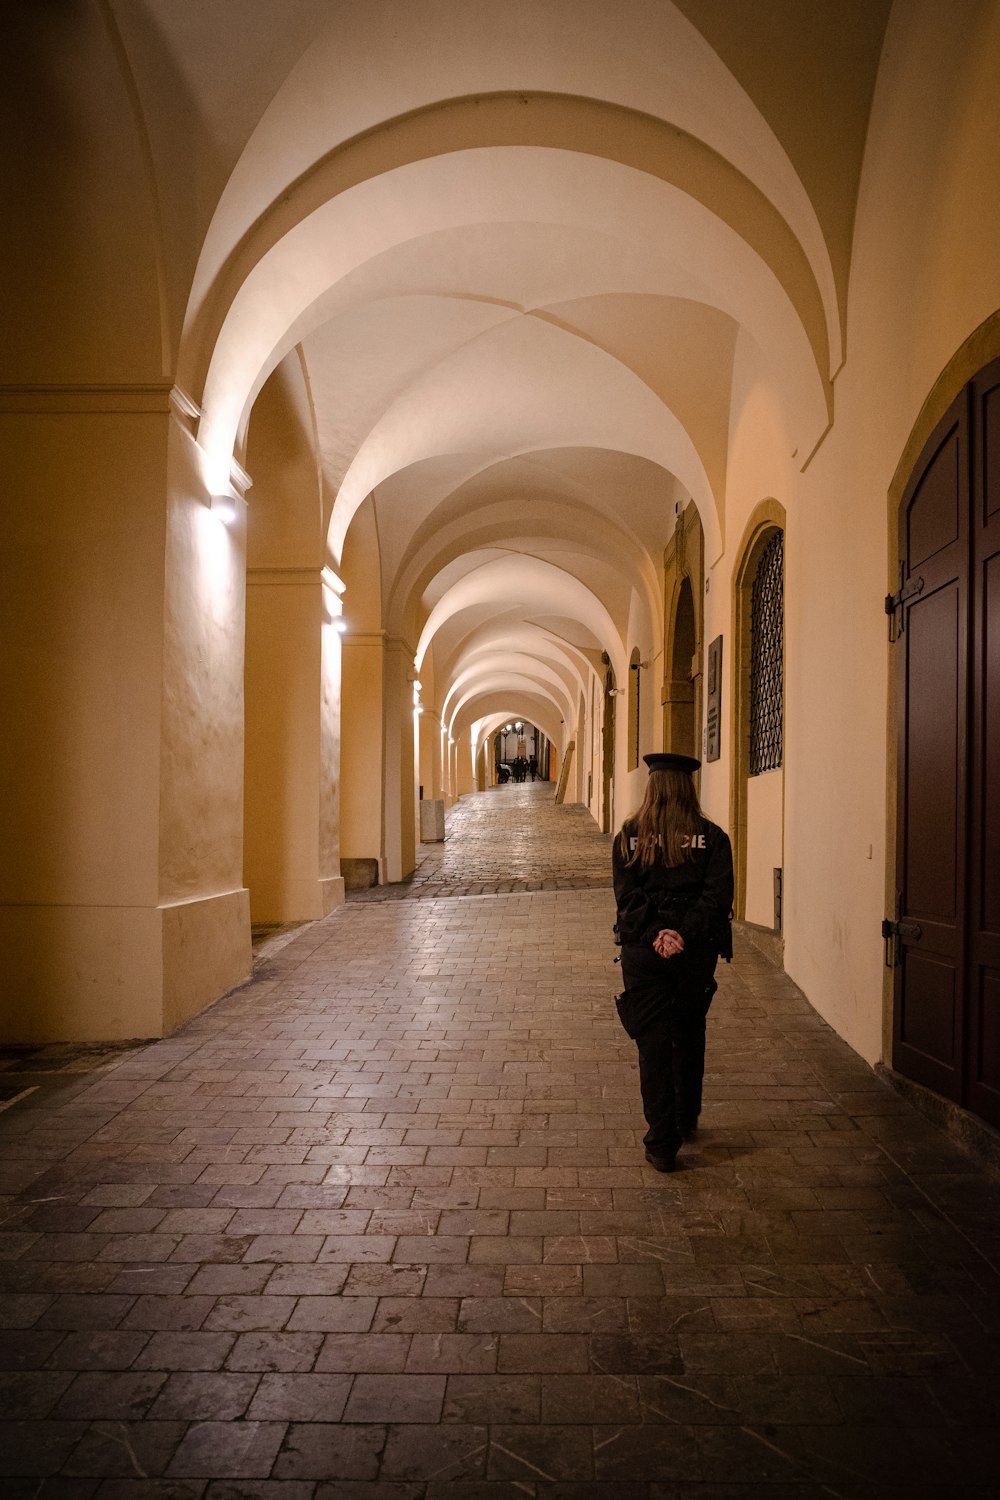 a person walking through a hallway